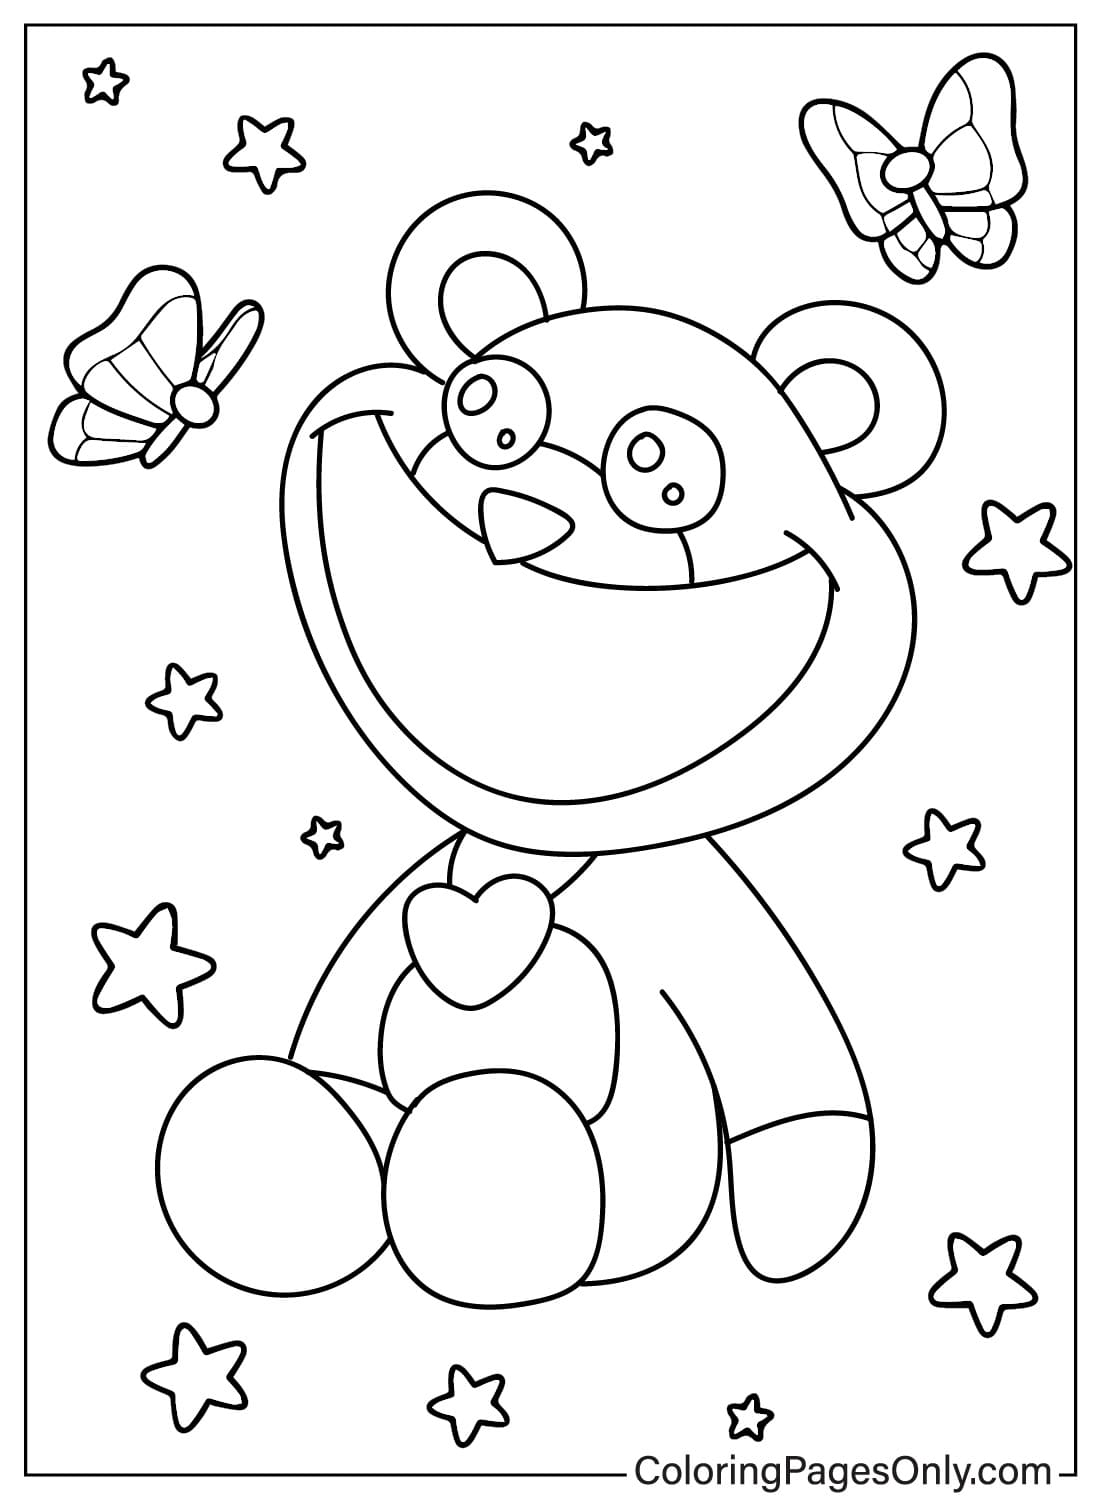 Bobby BearHug Foglio da colorare per bambini di Bobby BearHug